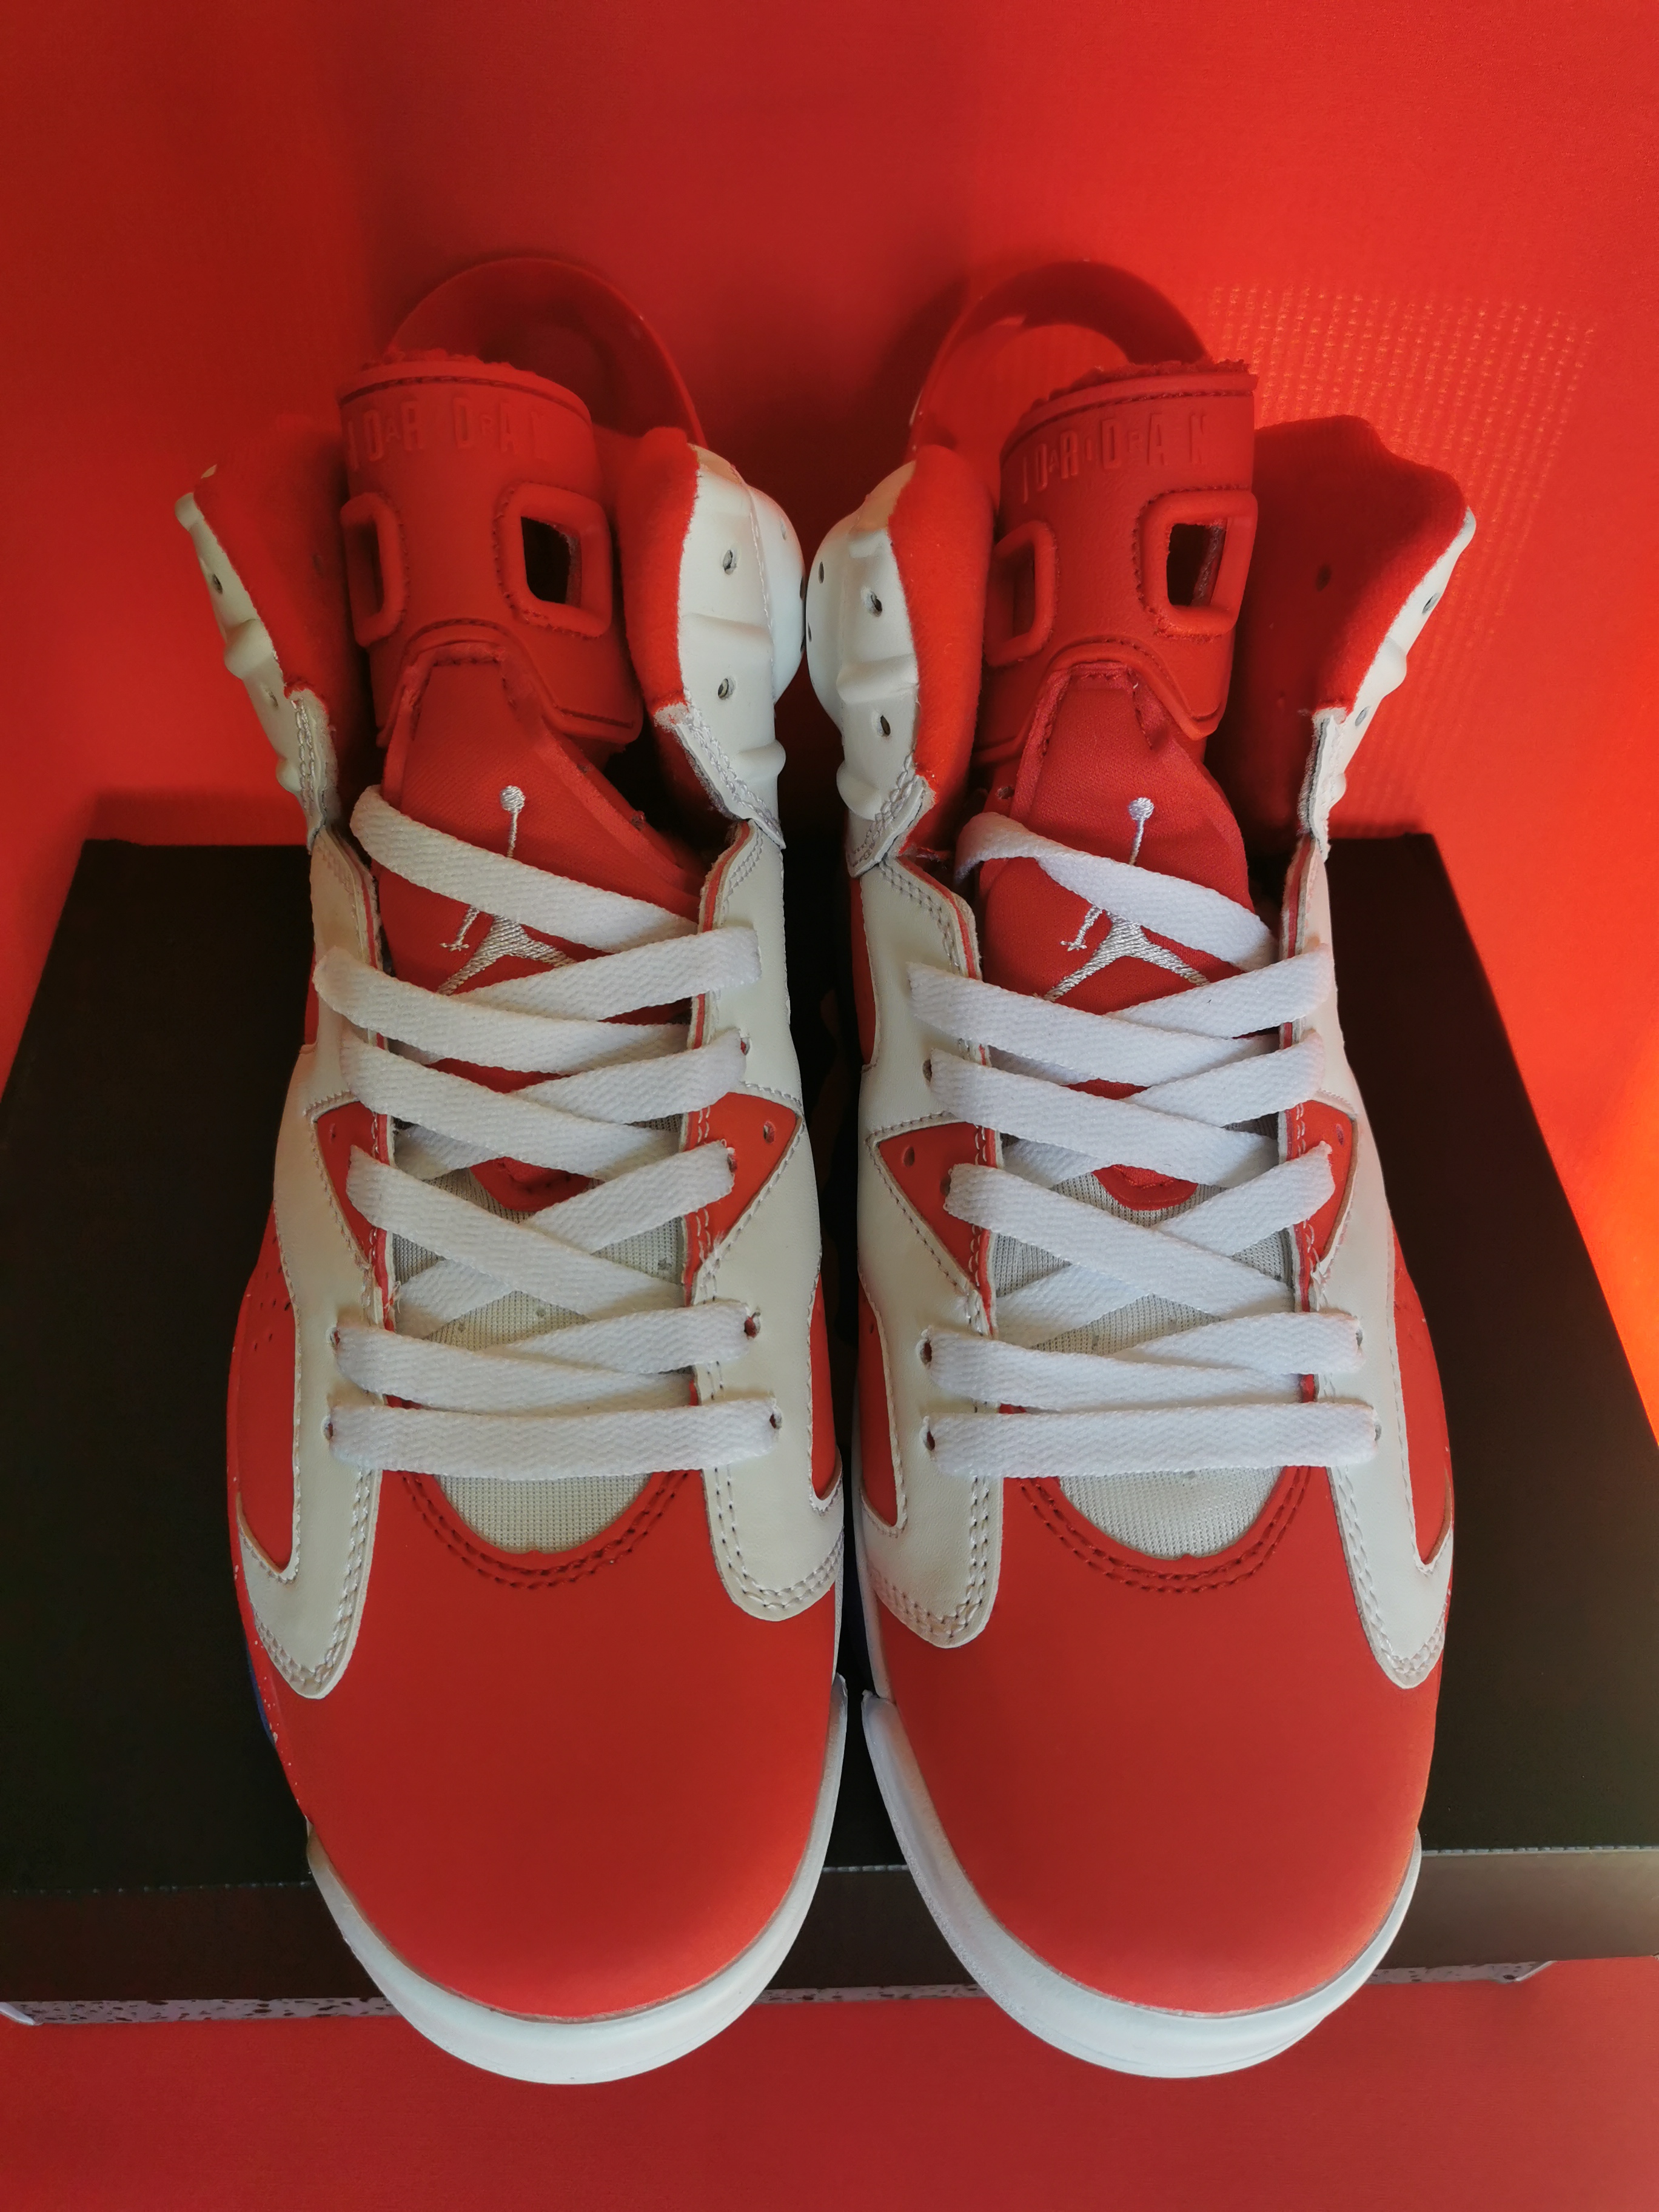 New 2022 Air Jordan 6 Retro White Hot Red Blue Shoes